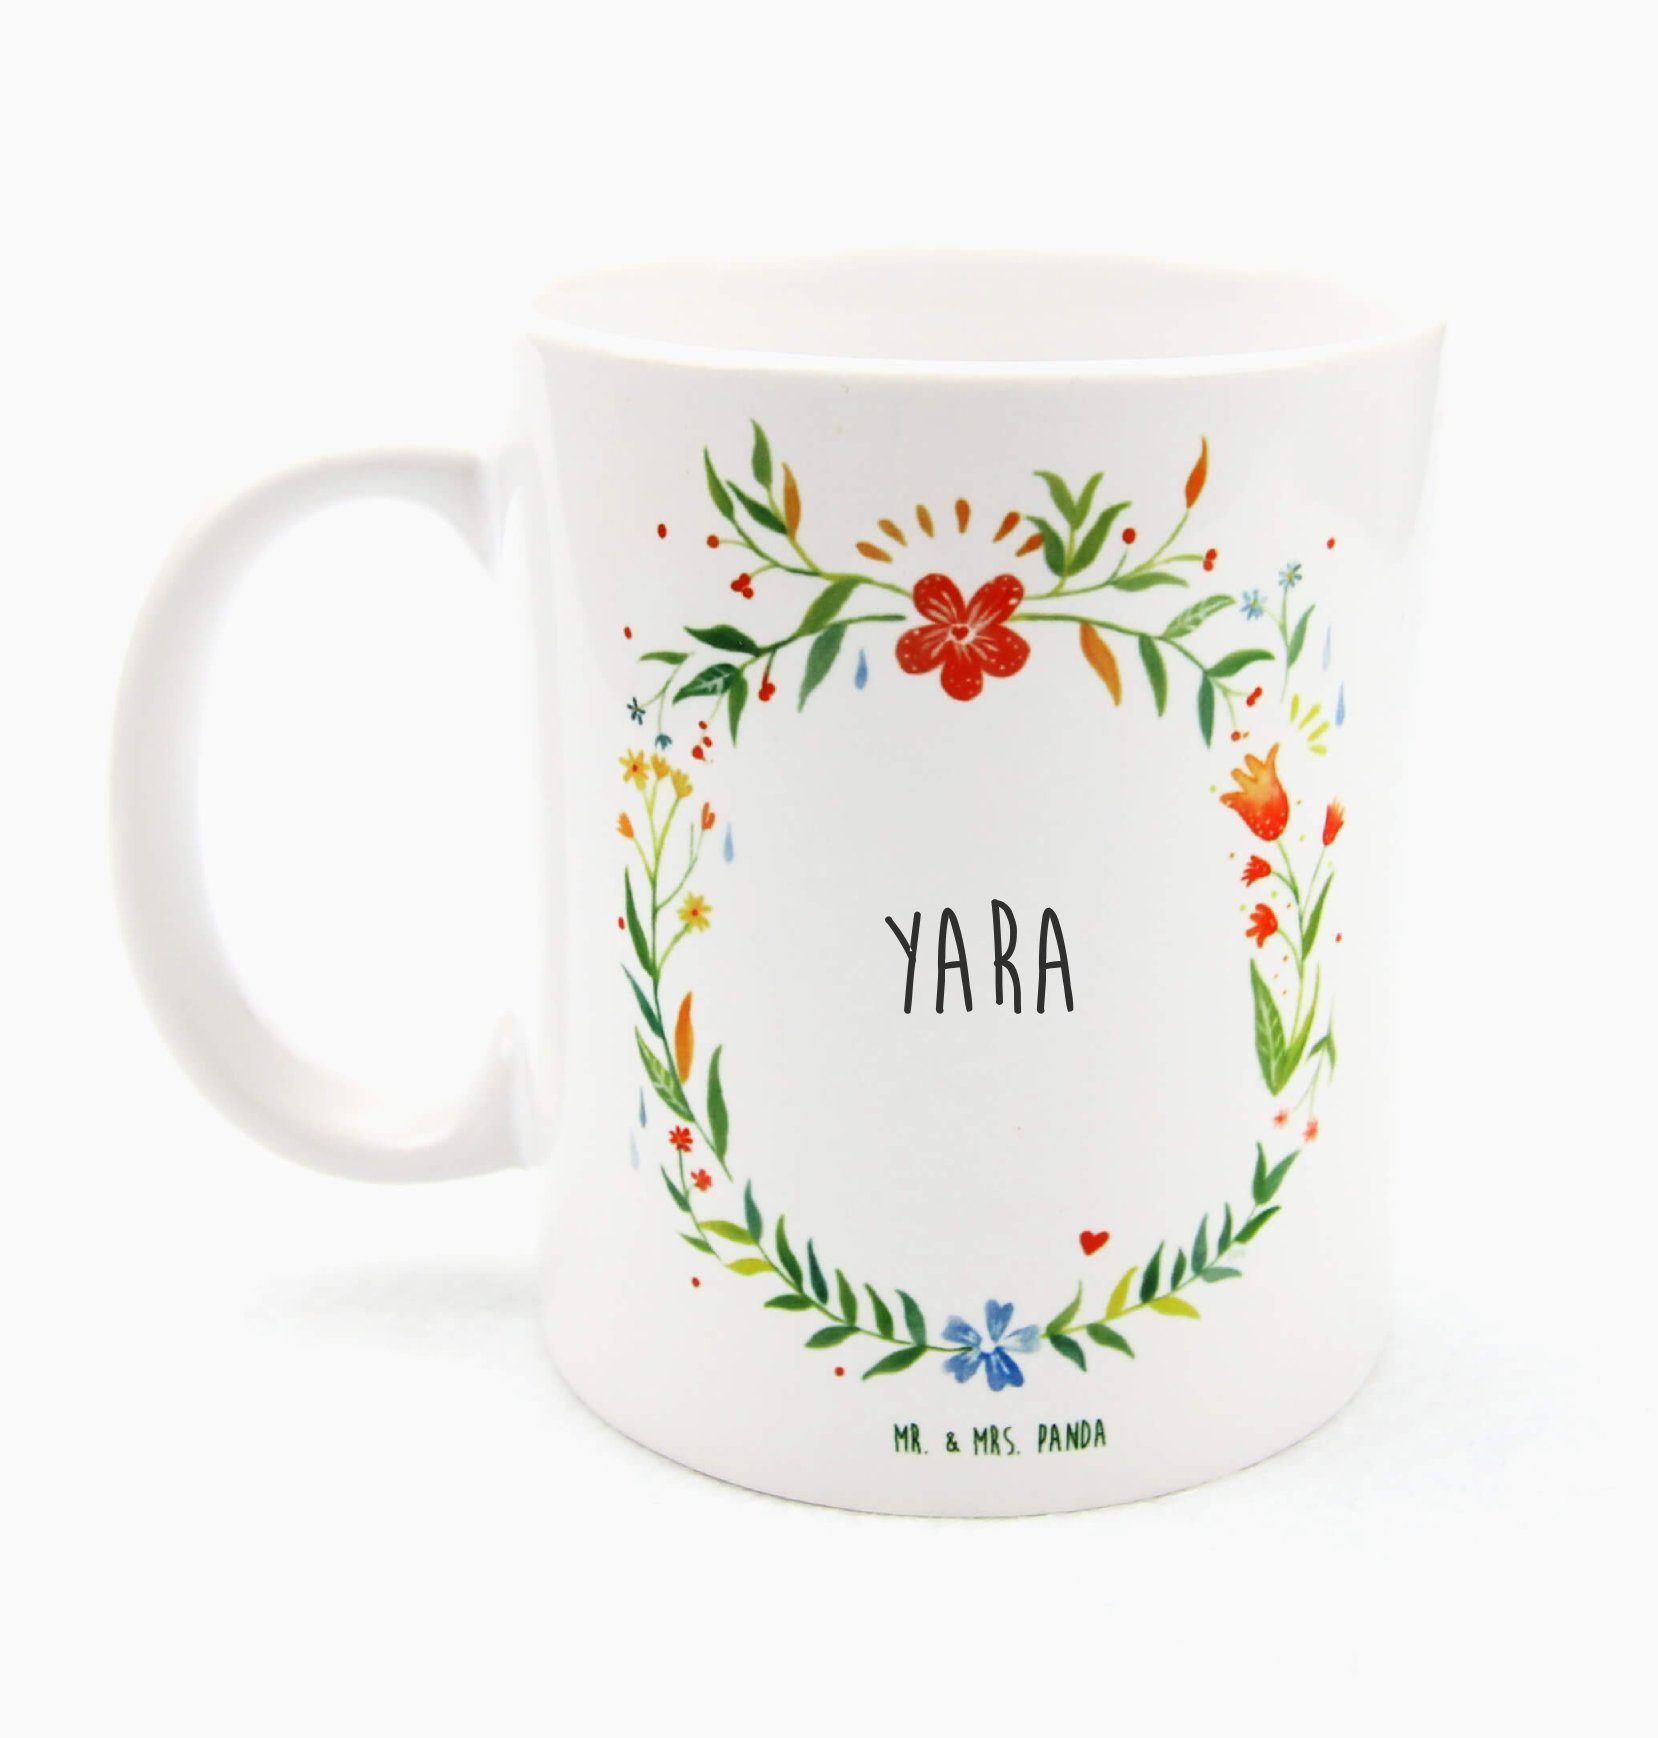 Mr. & Mrs. Panda Tasse Geschenk - Motive, Keramik Geschenk, Tasse, Tasse Yara Kaffee, Porzellantasse